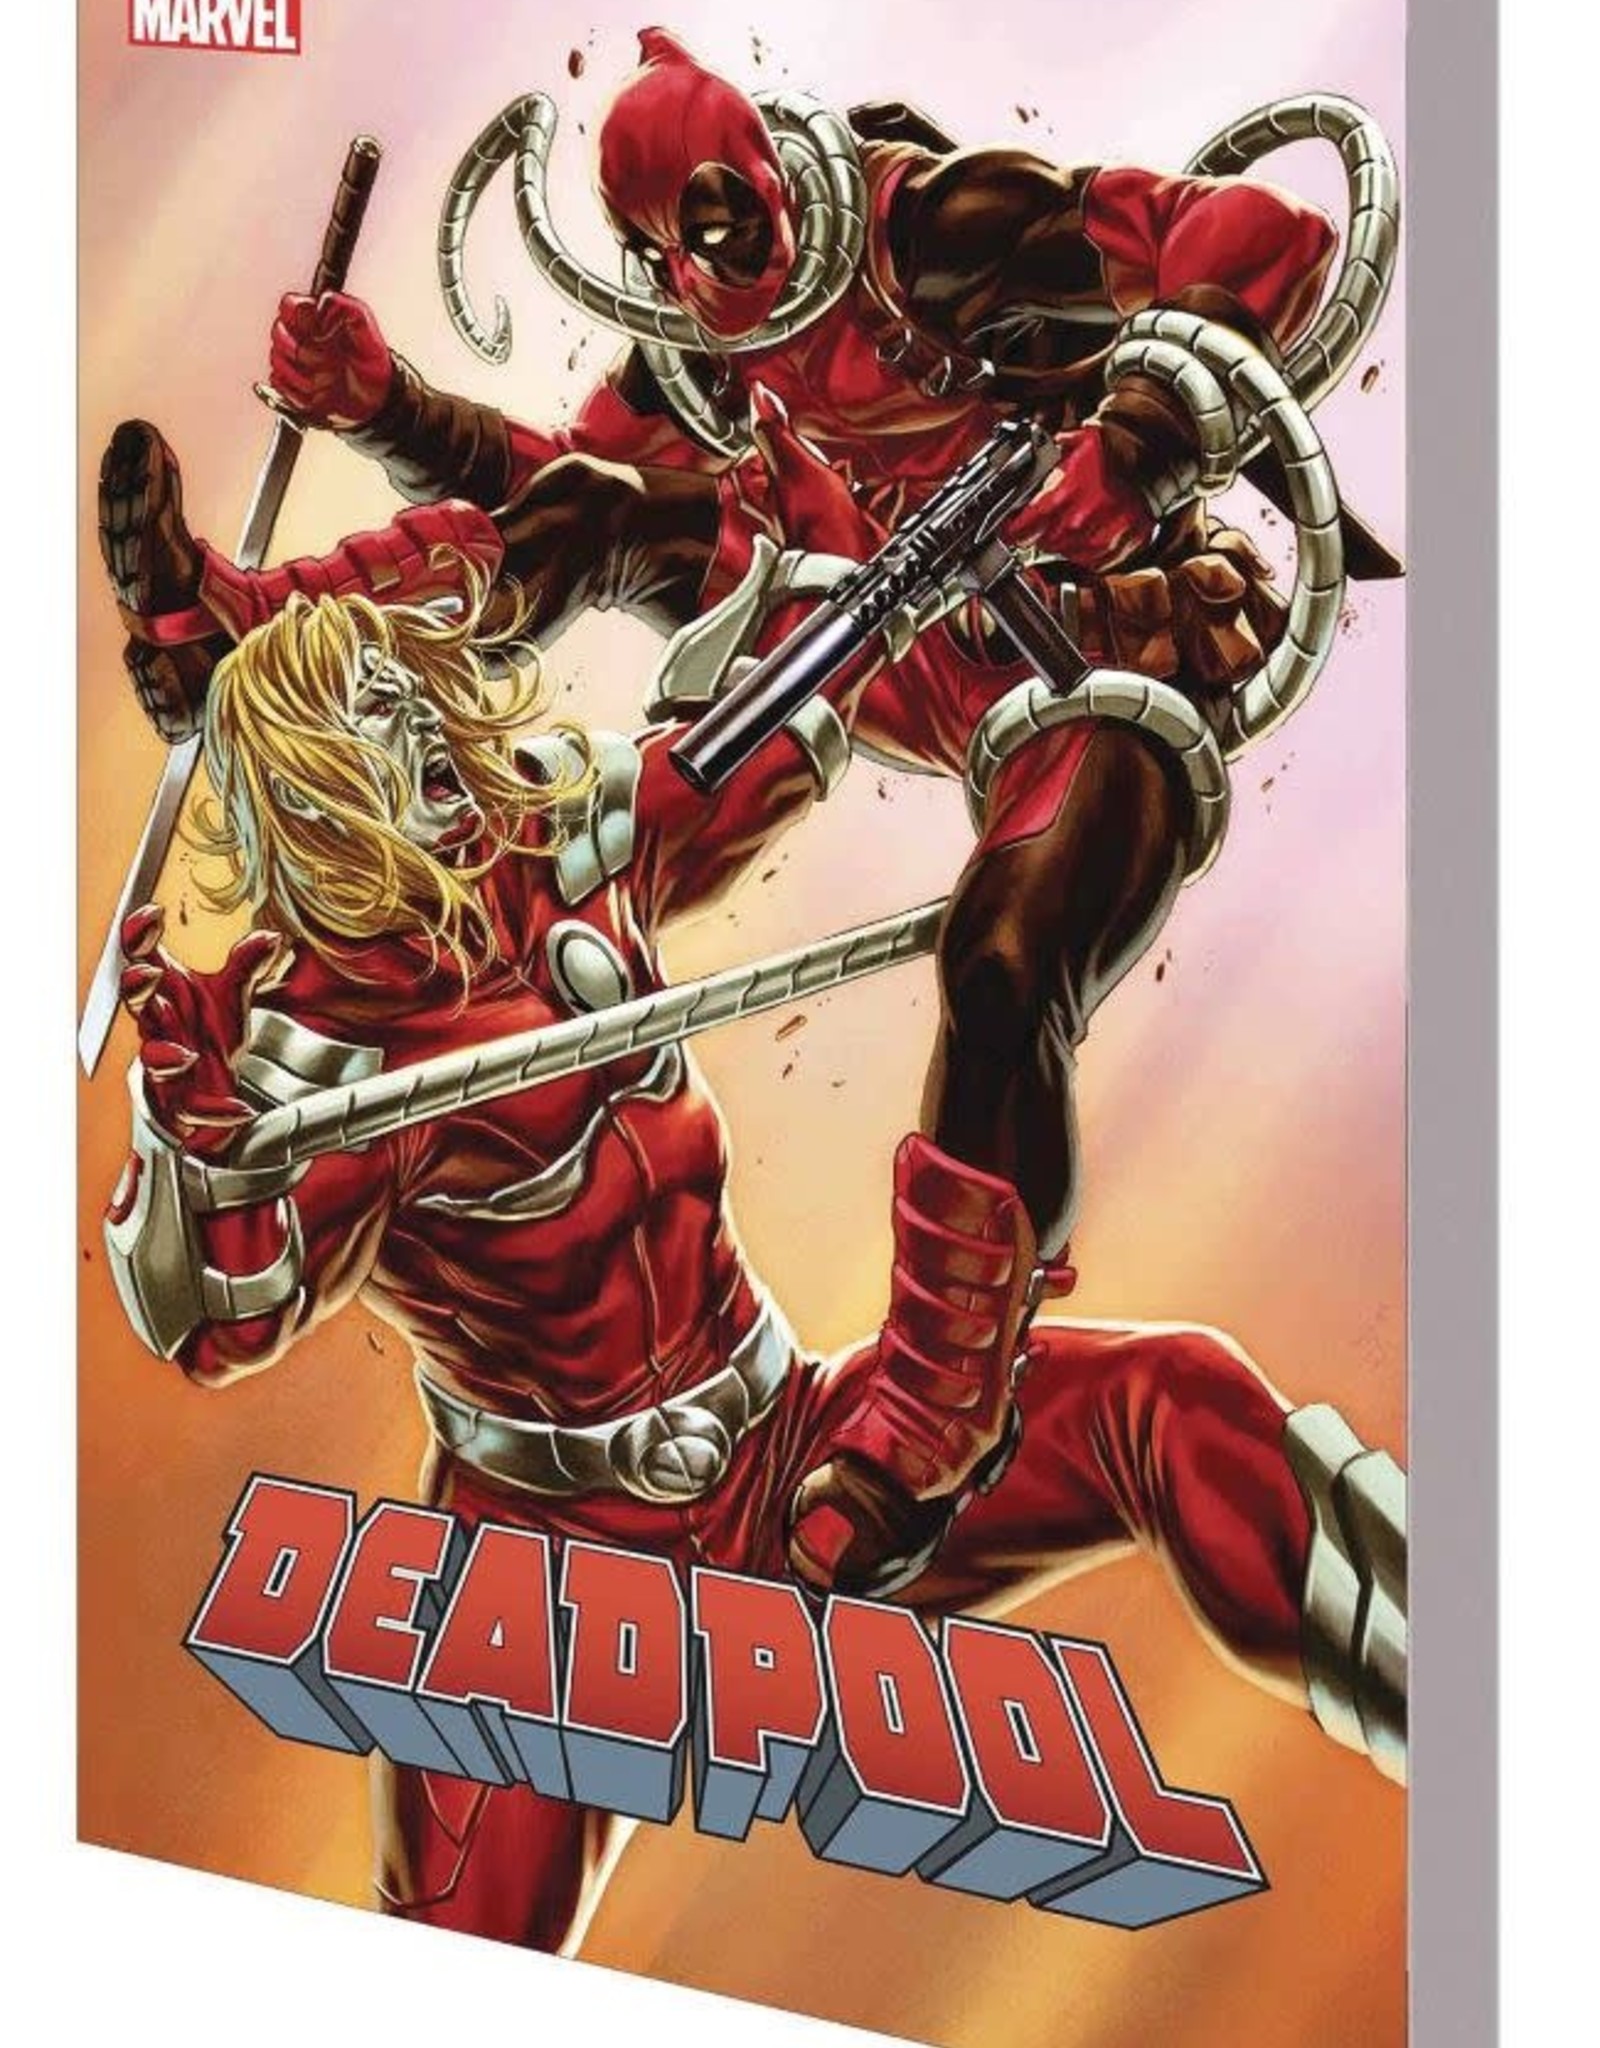 Marvel Comics Deadpool By Posehn & Duggan Complete Collection TP Vol 04